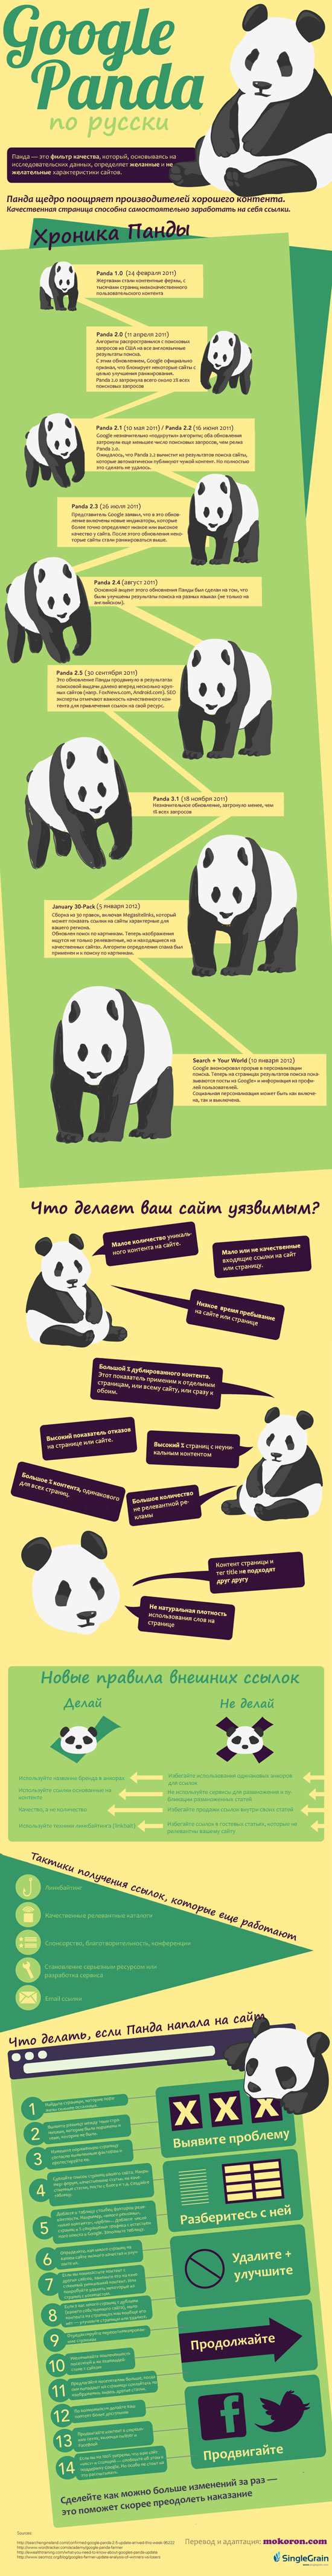 Google-Panda-Infographic